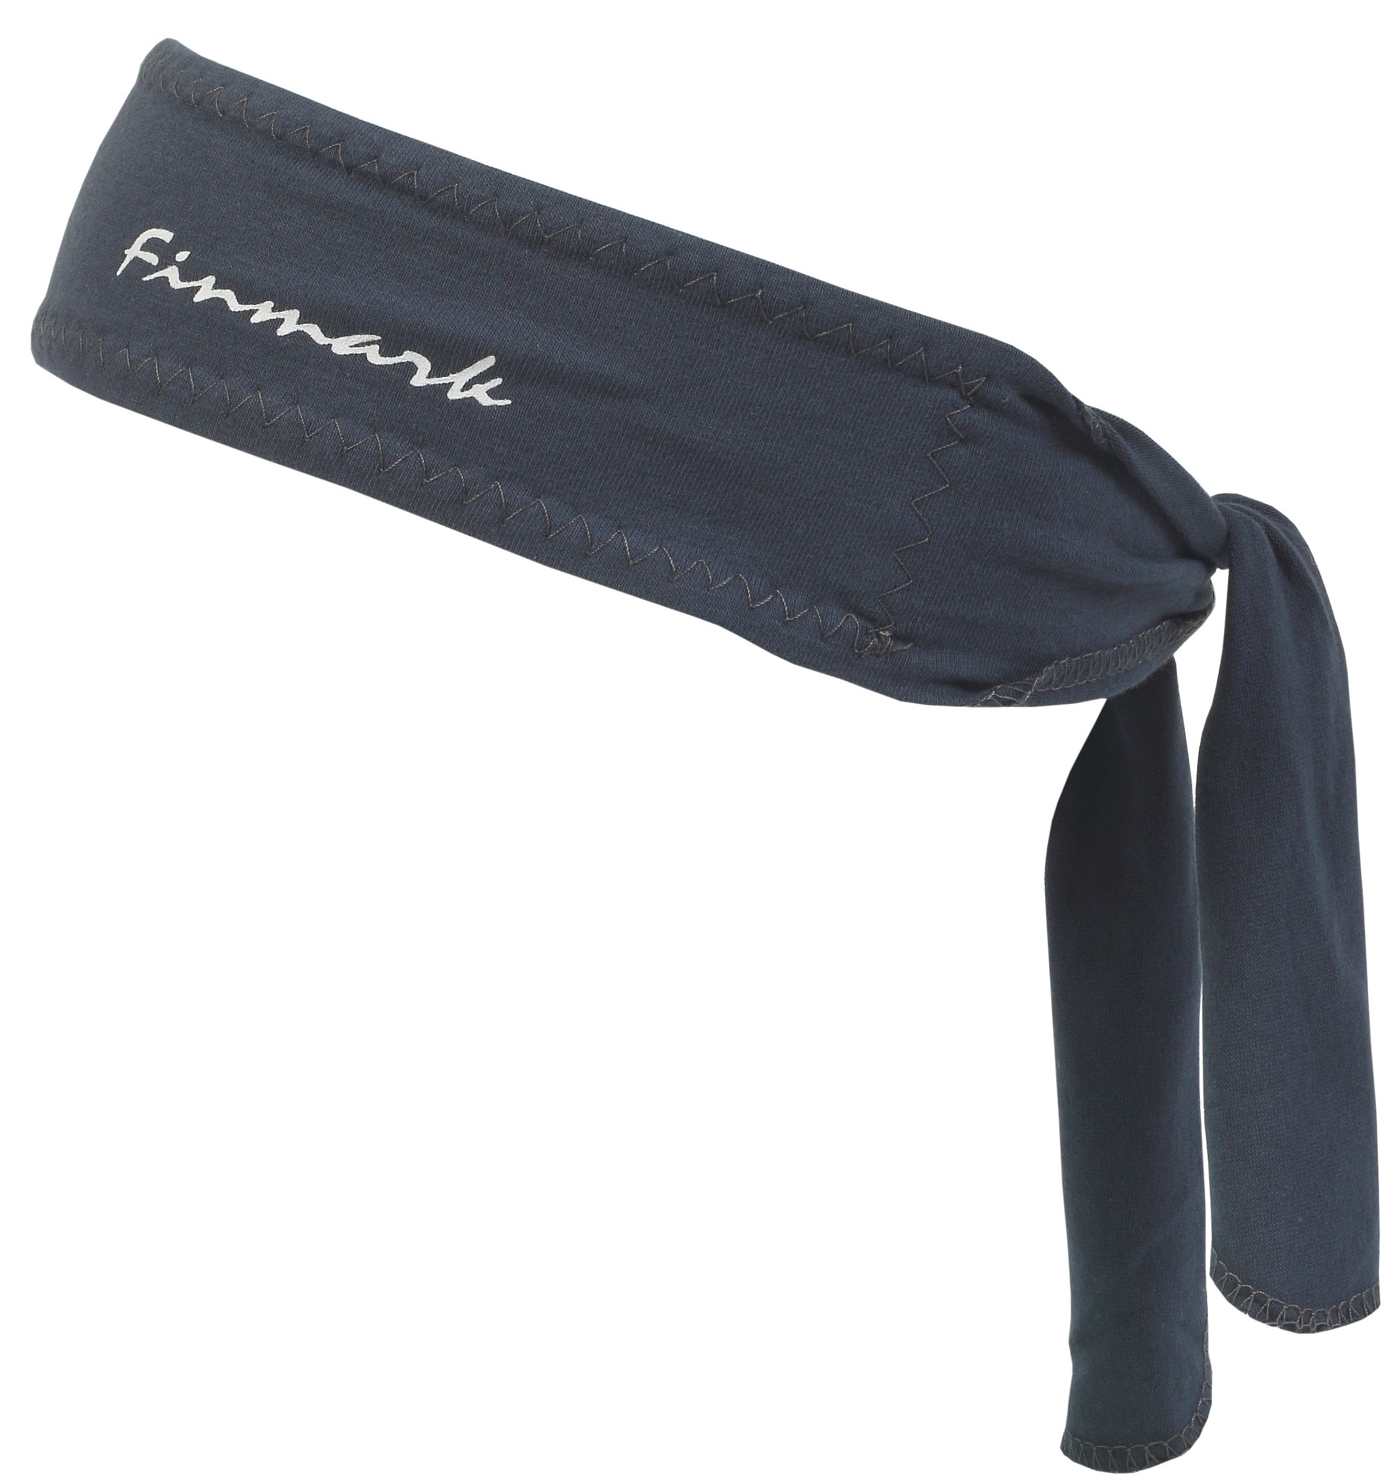 Functional headband